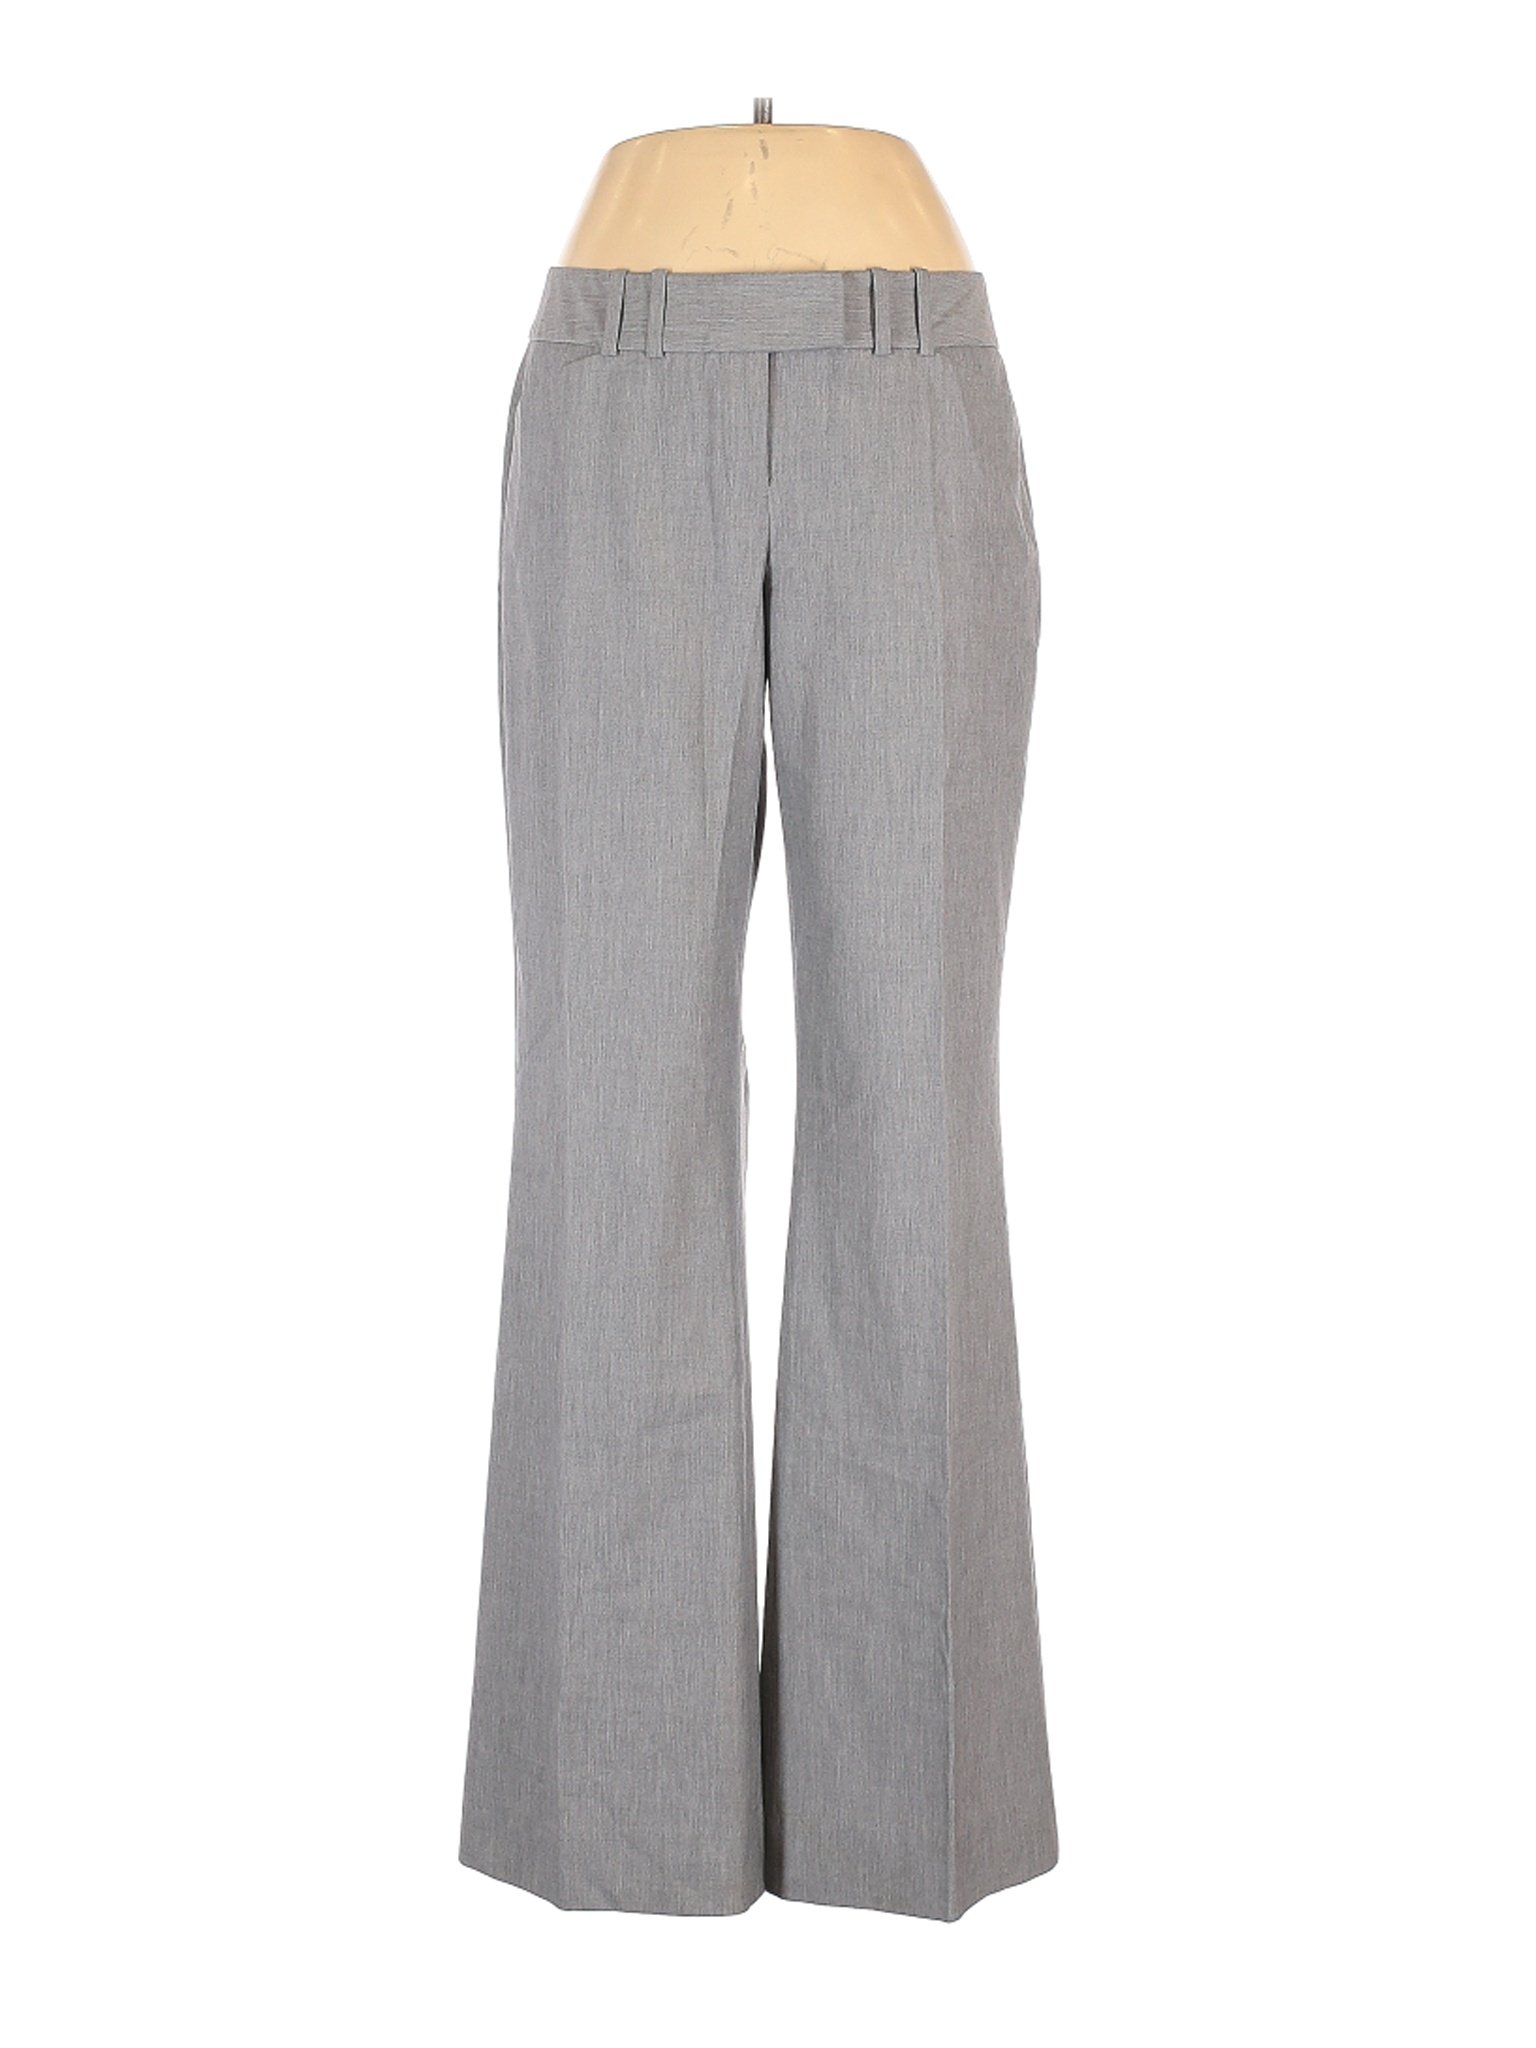 The Limited Women Gray Dress Pants 8 | eBay